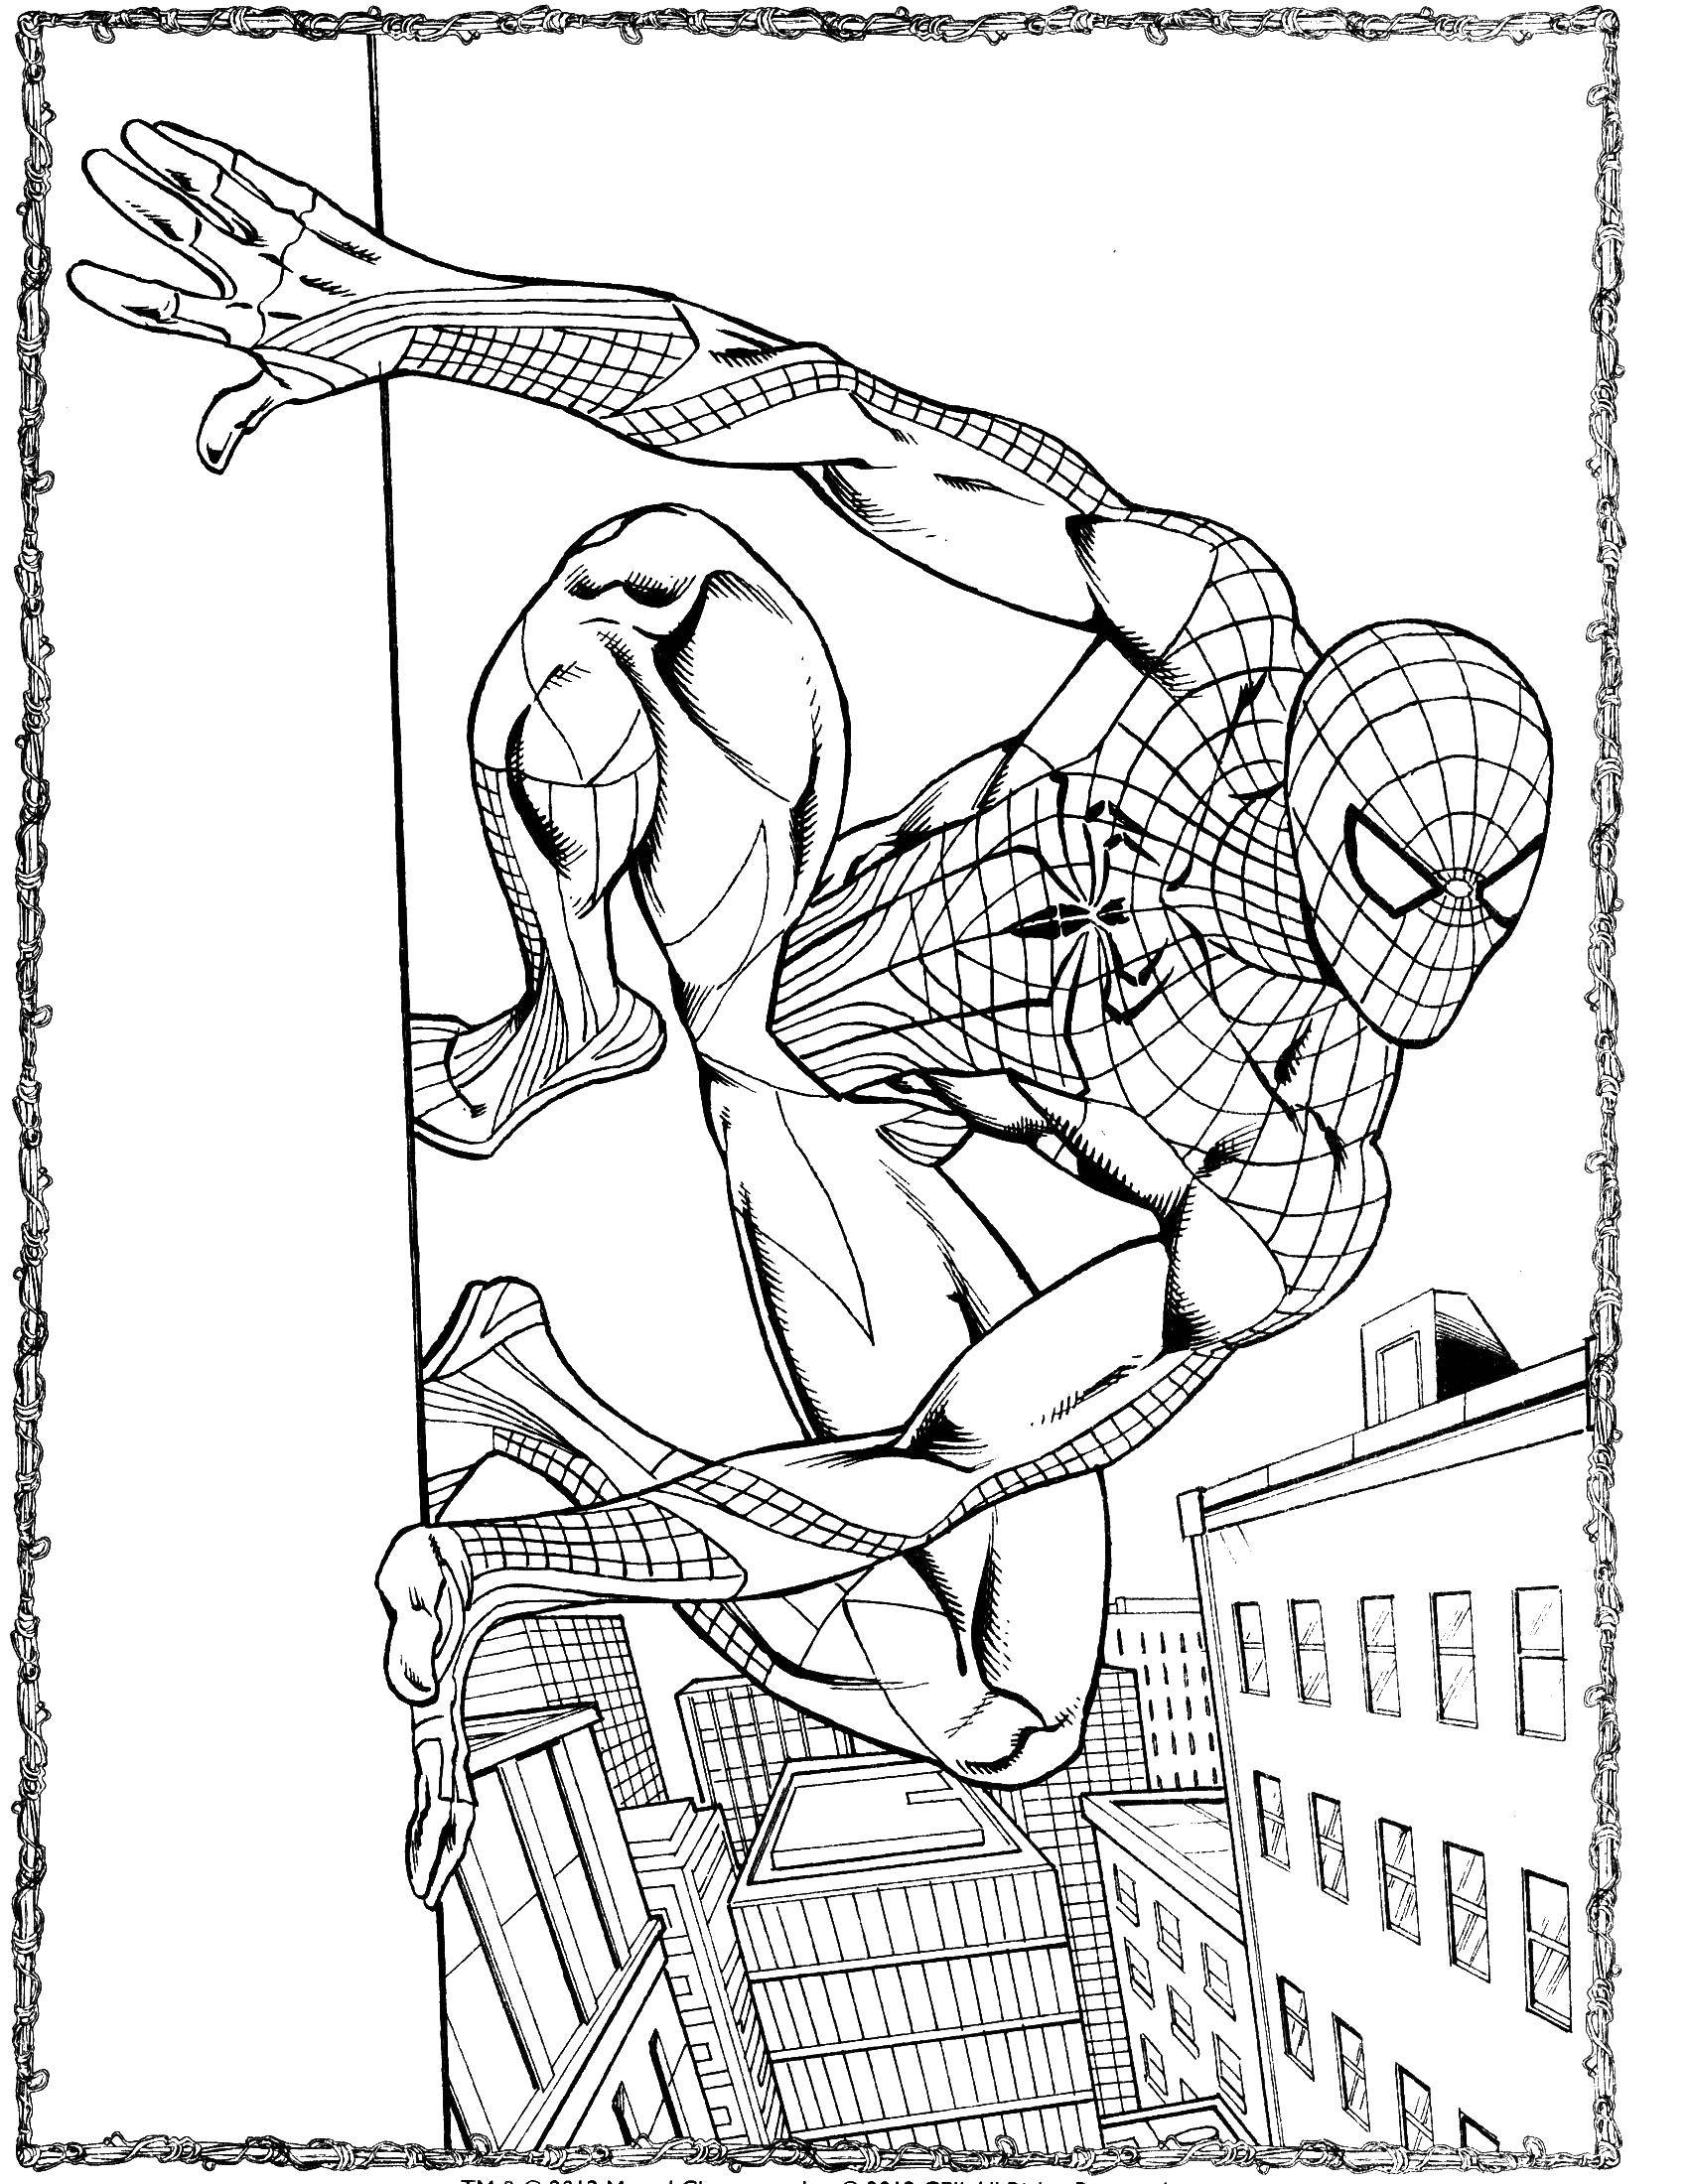 Название: Раскраска Человек паук на стене. Категория: человек паук. Теги: человек паук, супергерои.